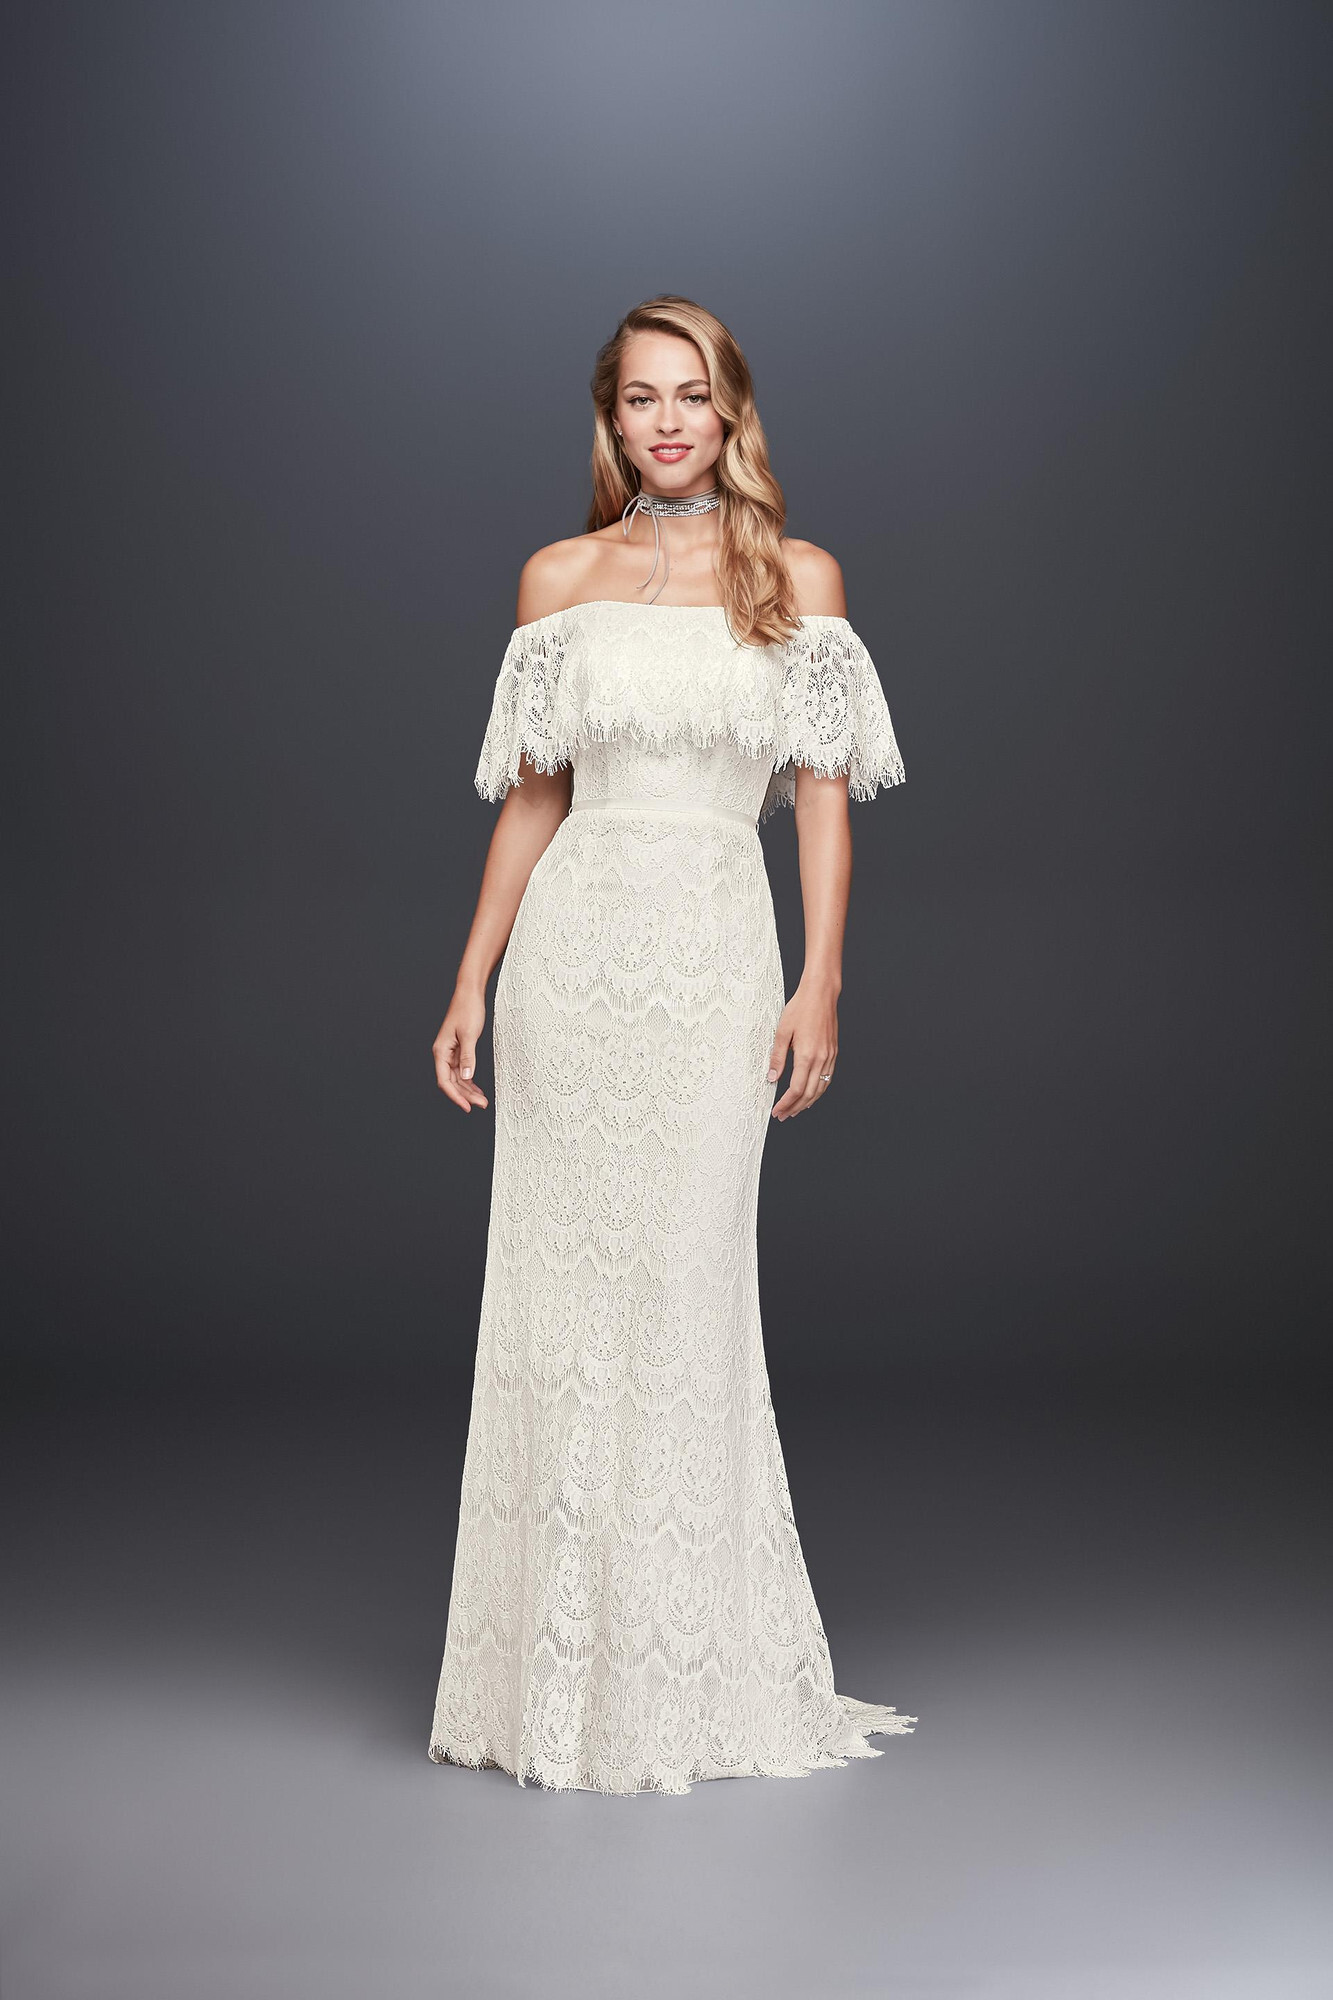 David Bridal Wedding Dresses Top Review david bridal wedding dresses ...